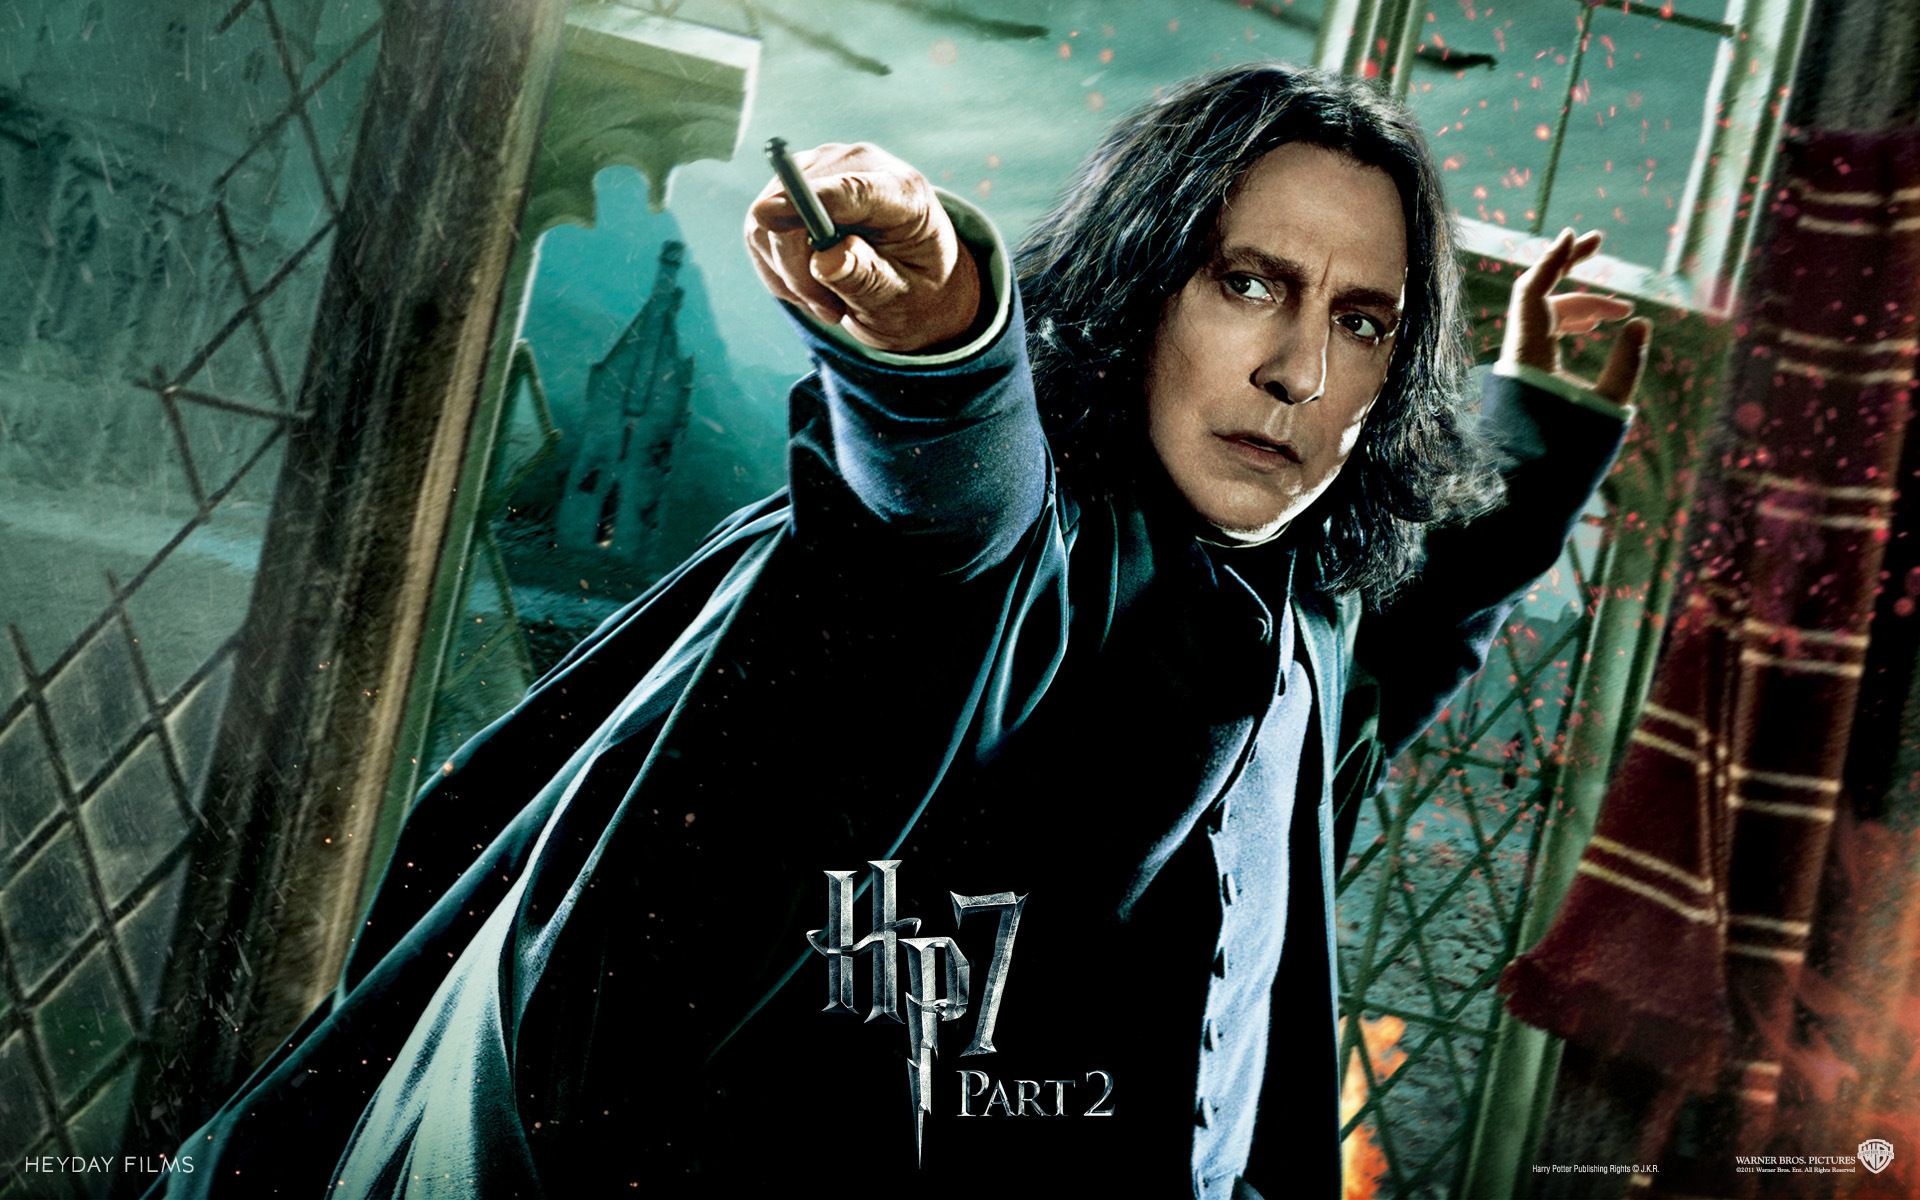 HP Wallpaper - Harry Potter Wallpaper 26099544 - Fanpop